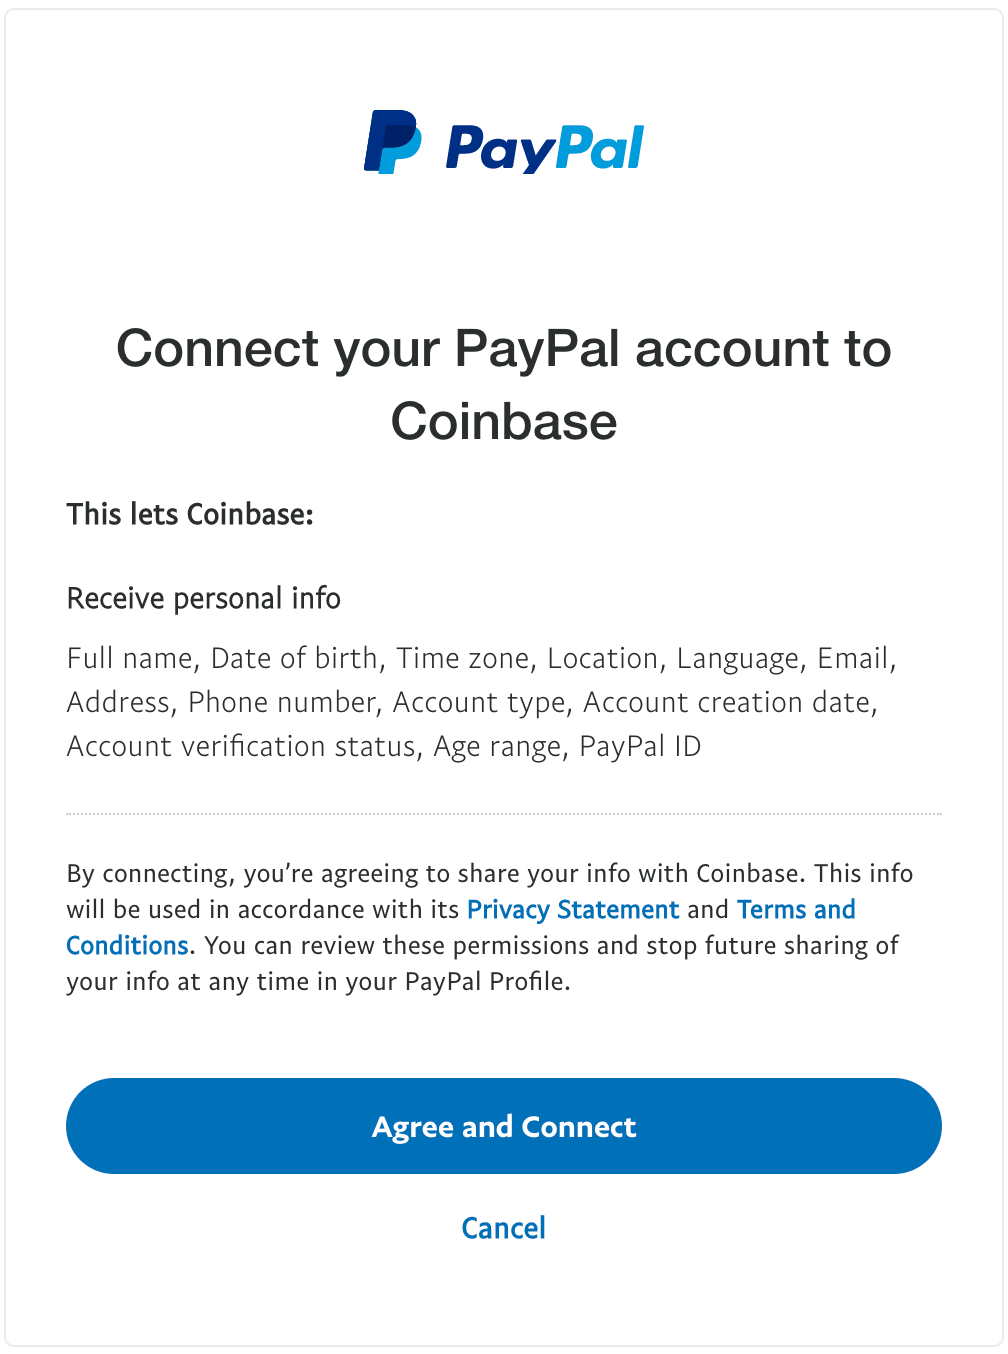 قم بربط حساب PayPal الخاص بك بـ Coinbase